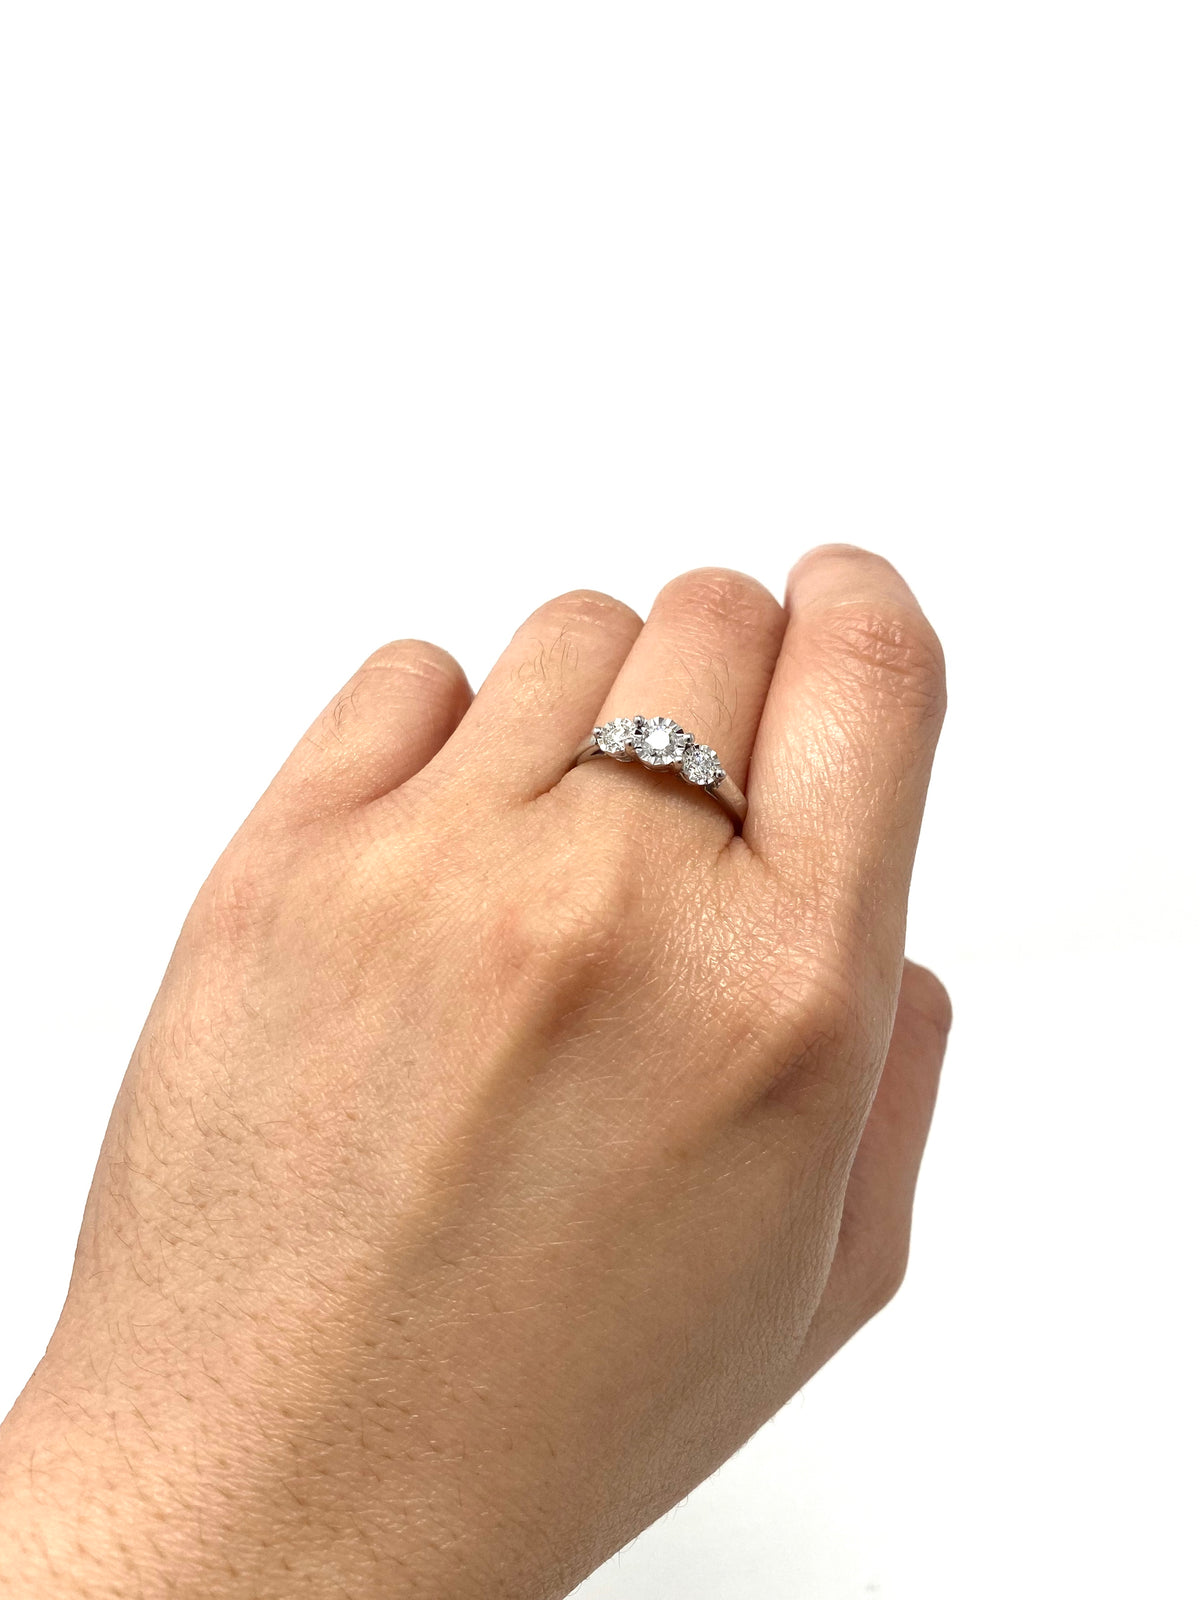 10K White Gold 0.29cttw 3 Stone Diamond Engagement Ring - Size 6.5